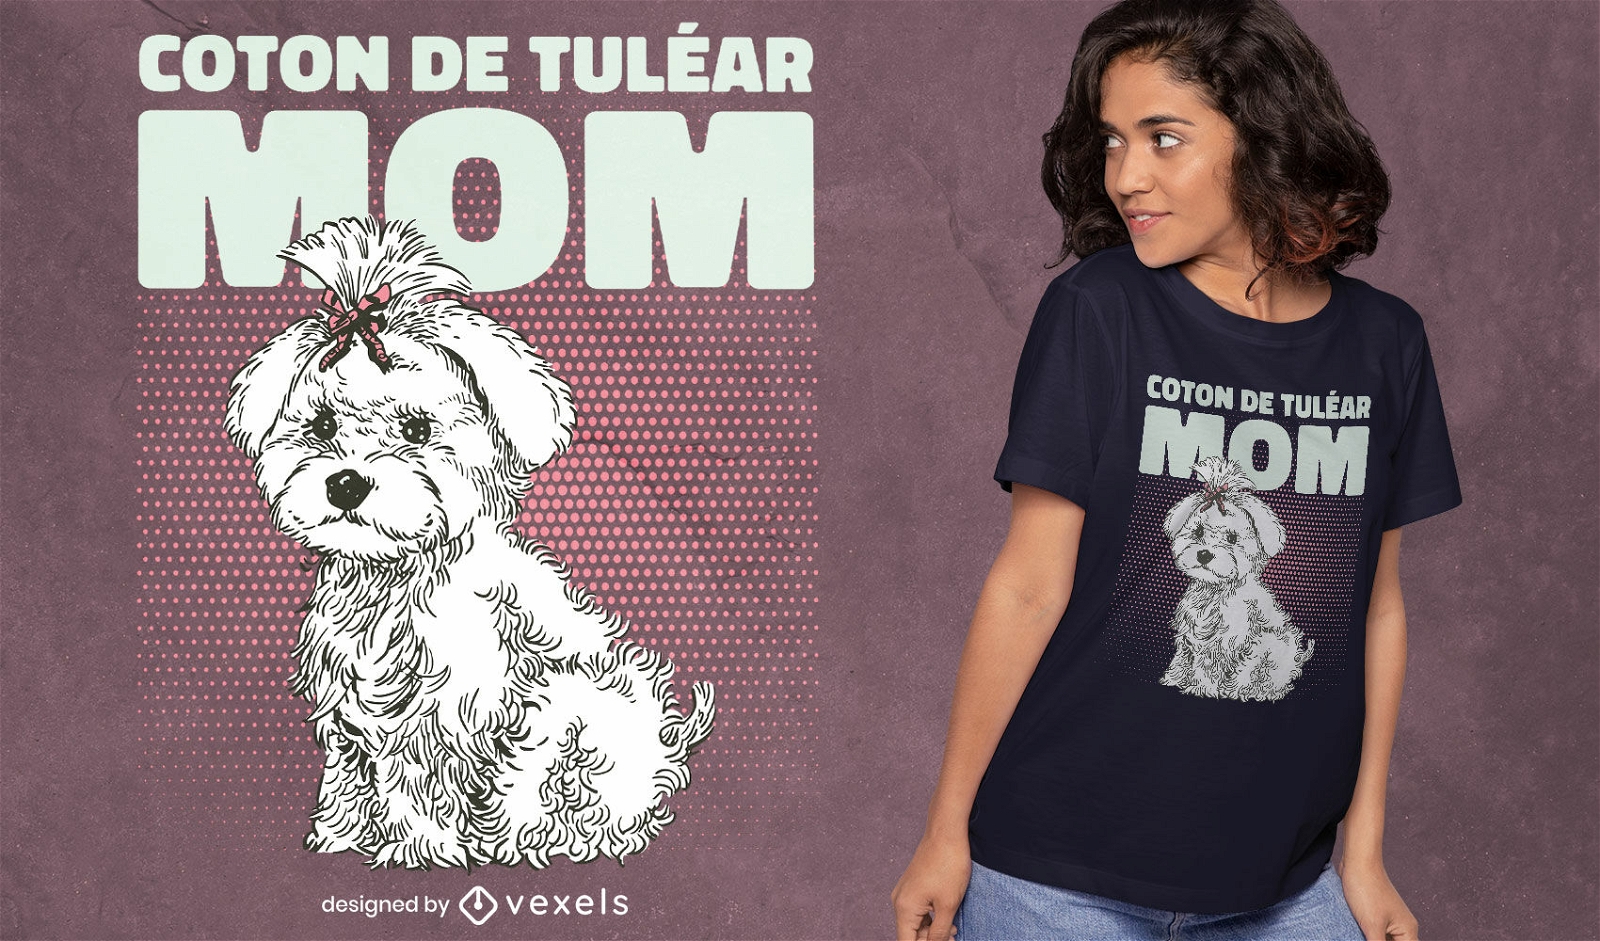 Tulear cotton doggy t-shirt design